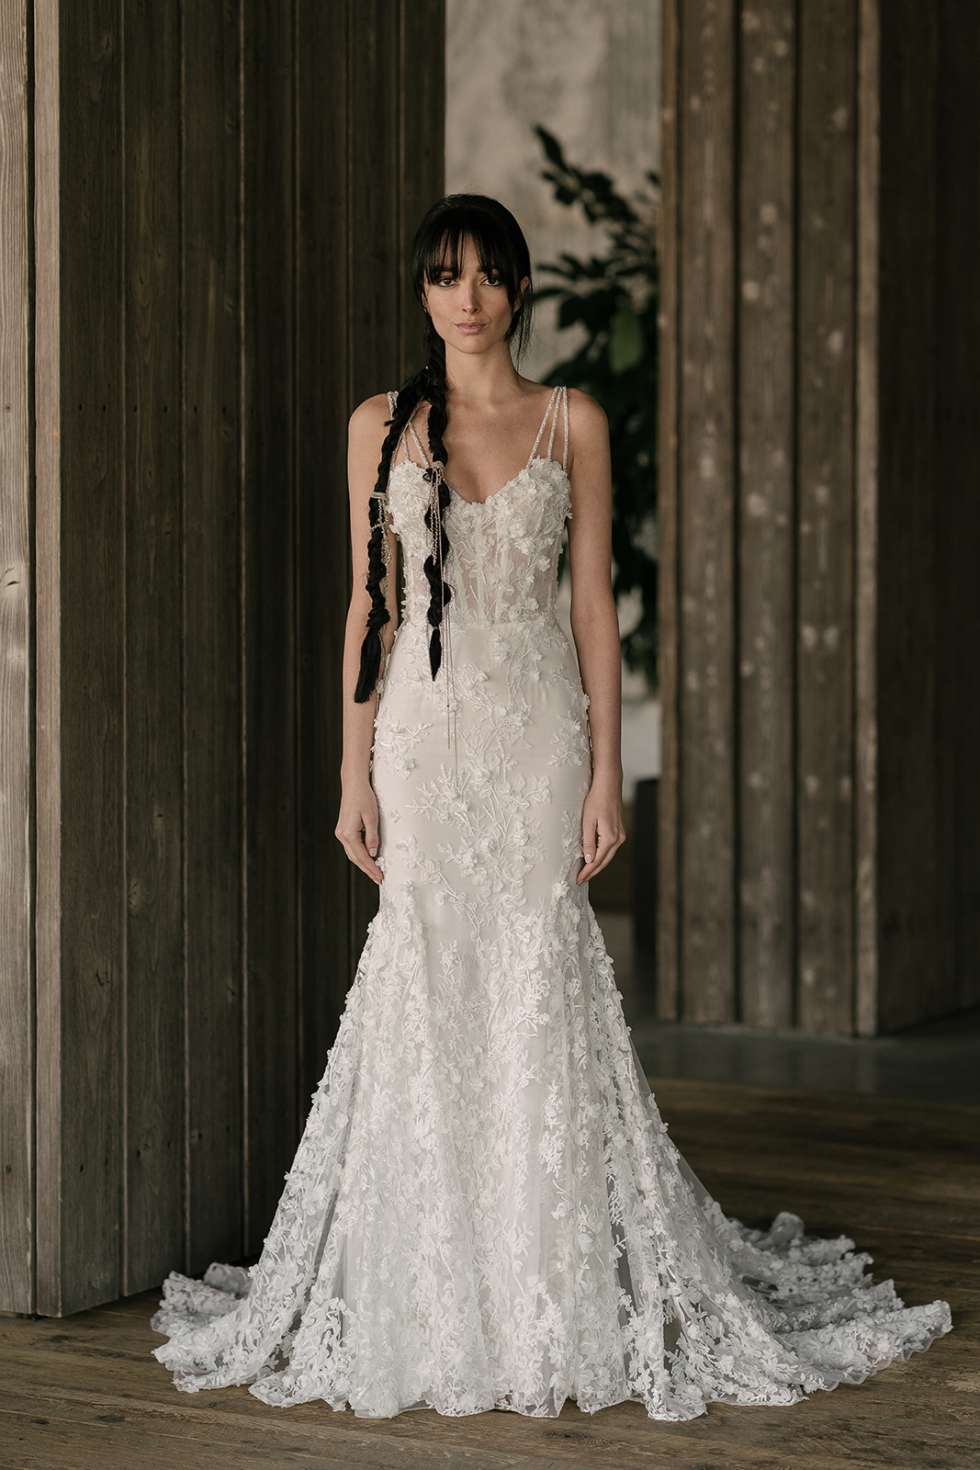 The Rivini 2019 Wedding Dress Collection by Rita Vinieris